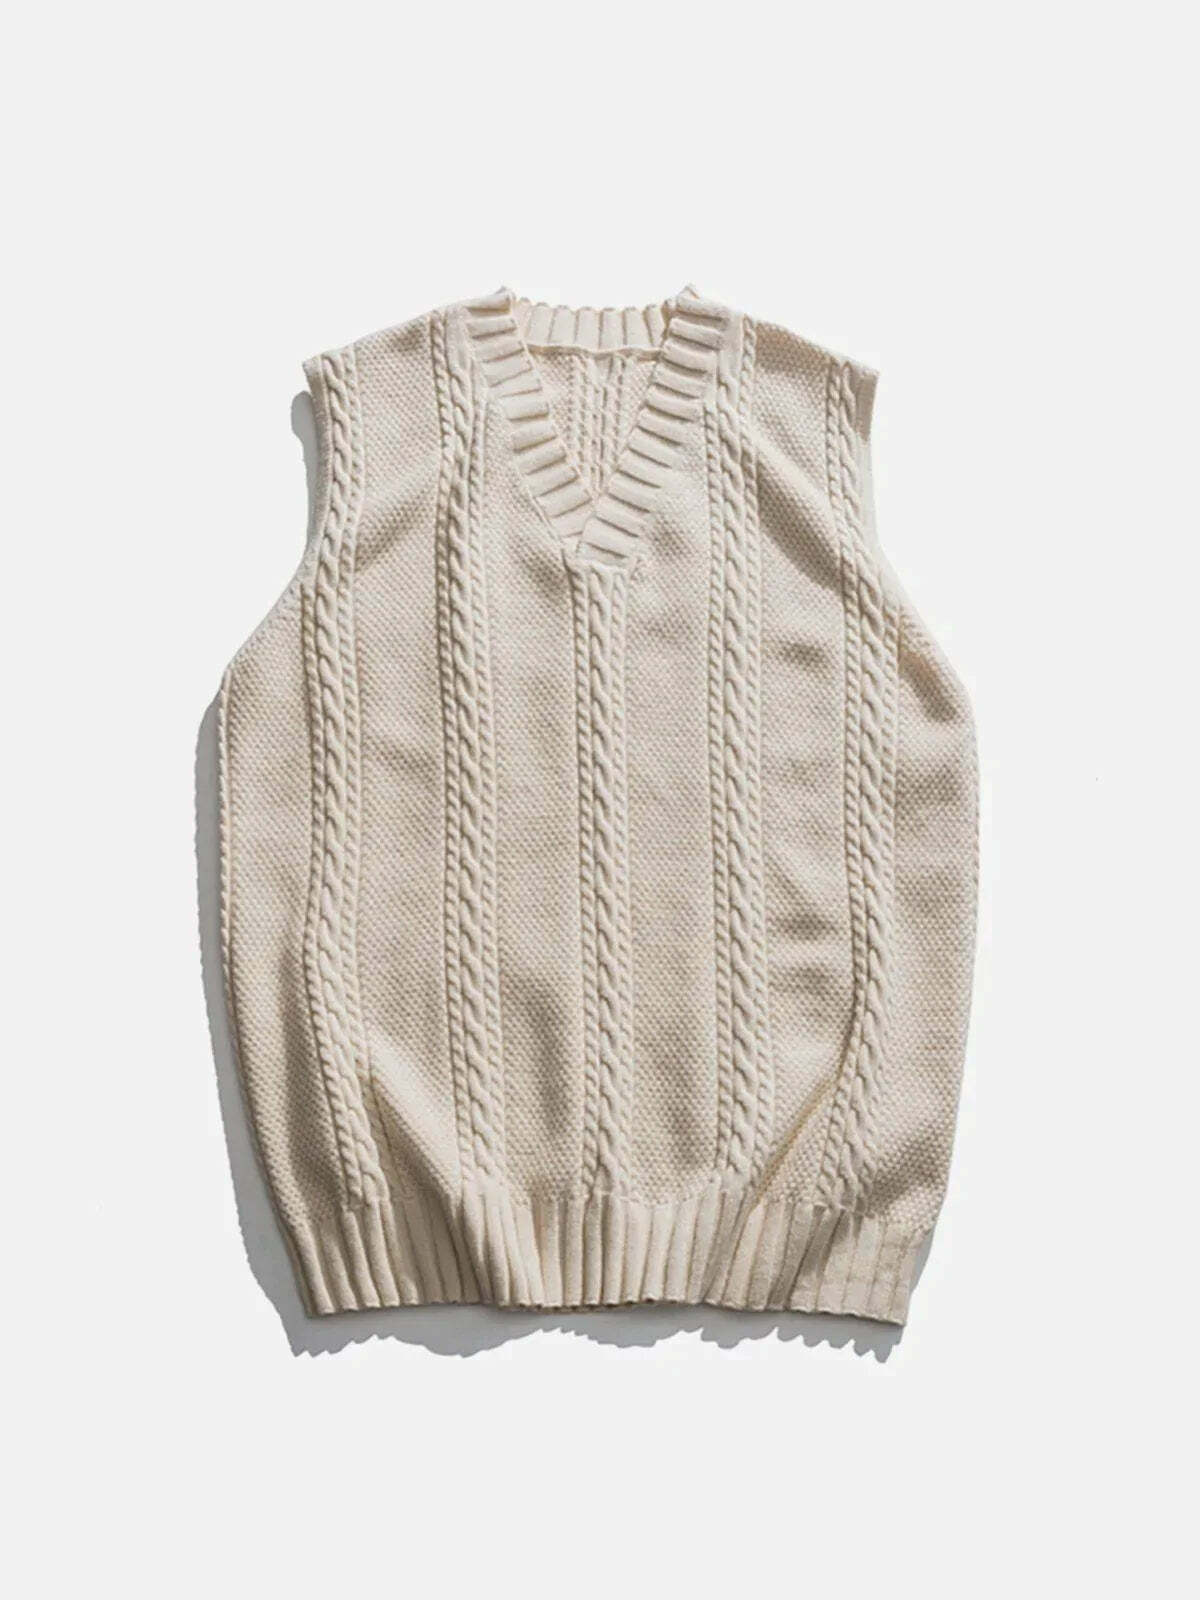 braided knit sweater vest edgy y2k fashion essential 1658